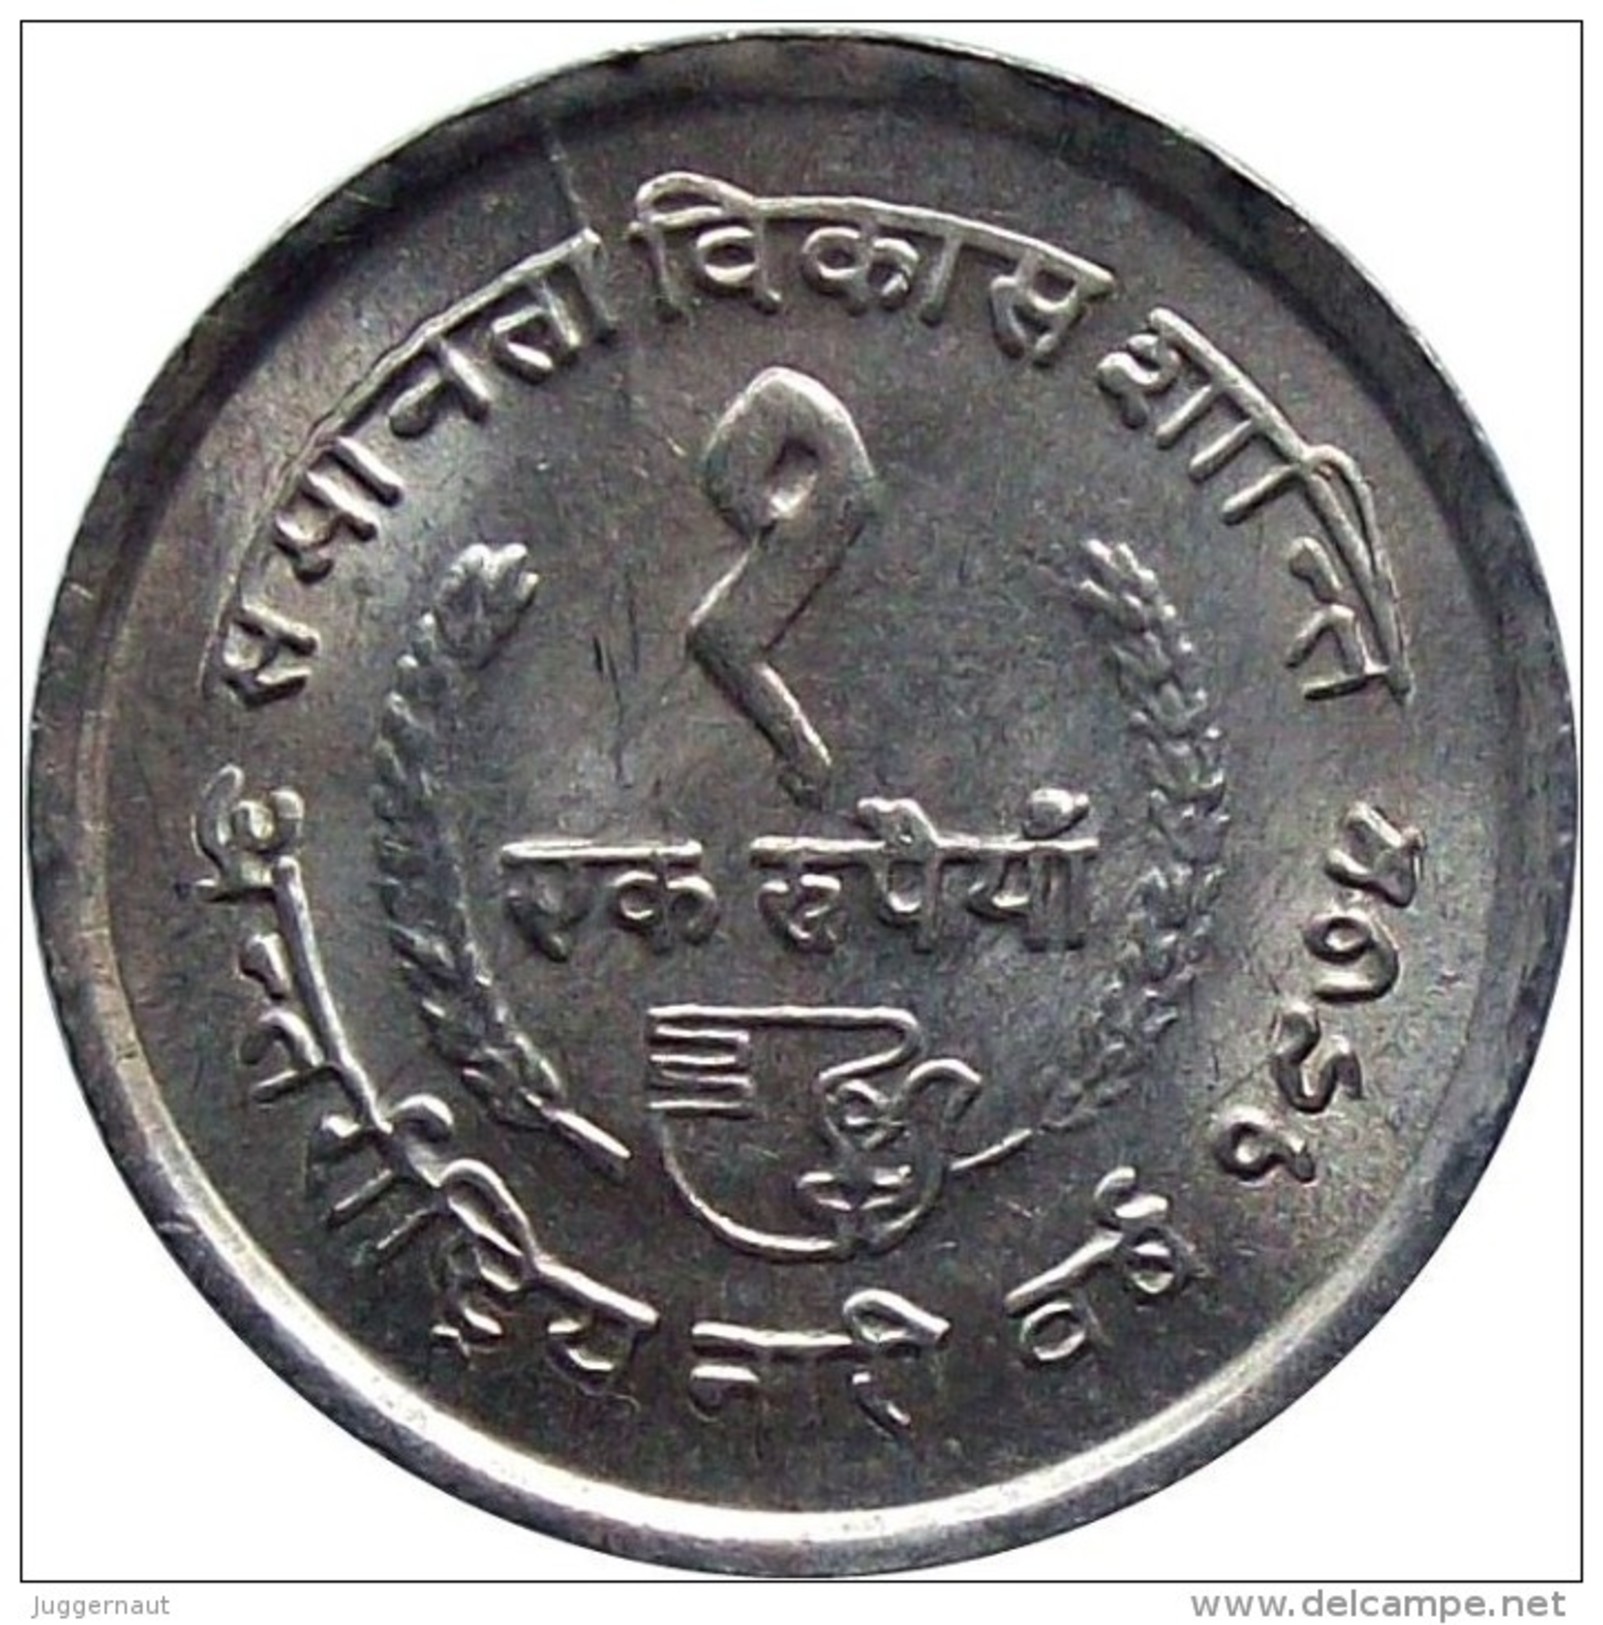 INTERNATIONAL WOMEN'S YEAR 1975 CIRCULATION COIN NEPAL 1975 KM-831 UNCIRCULATED UNC - Nepal